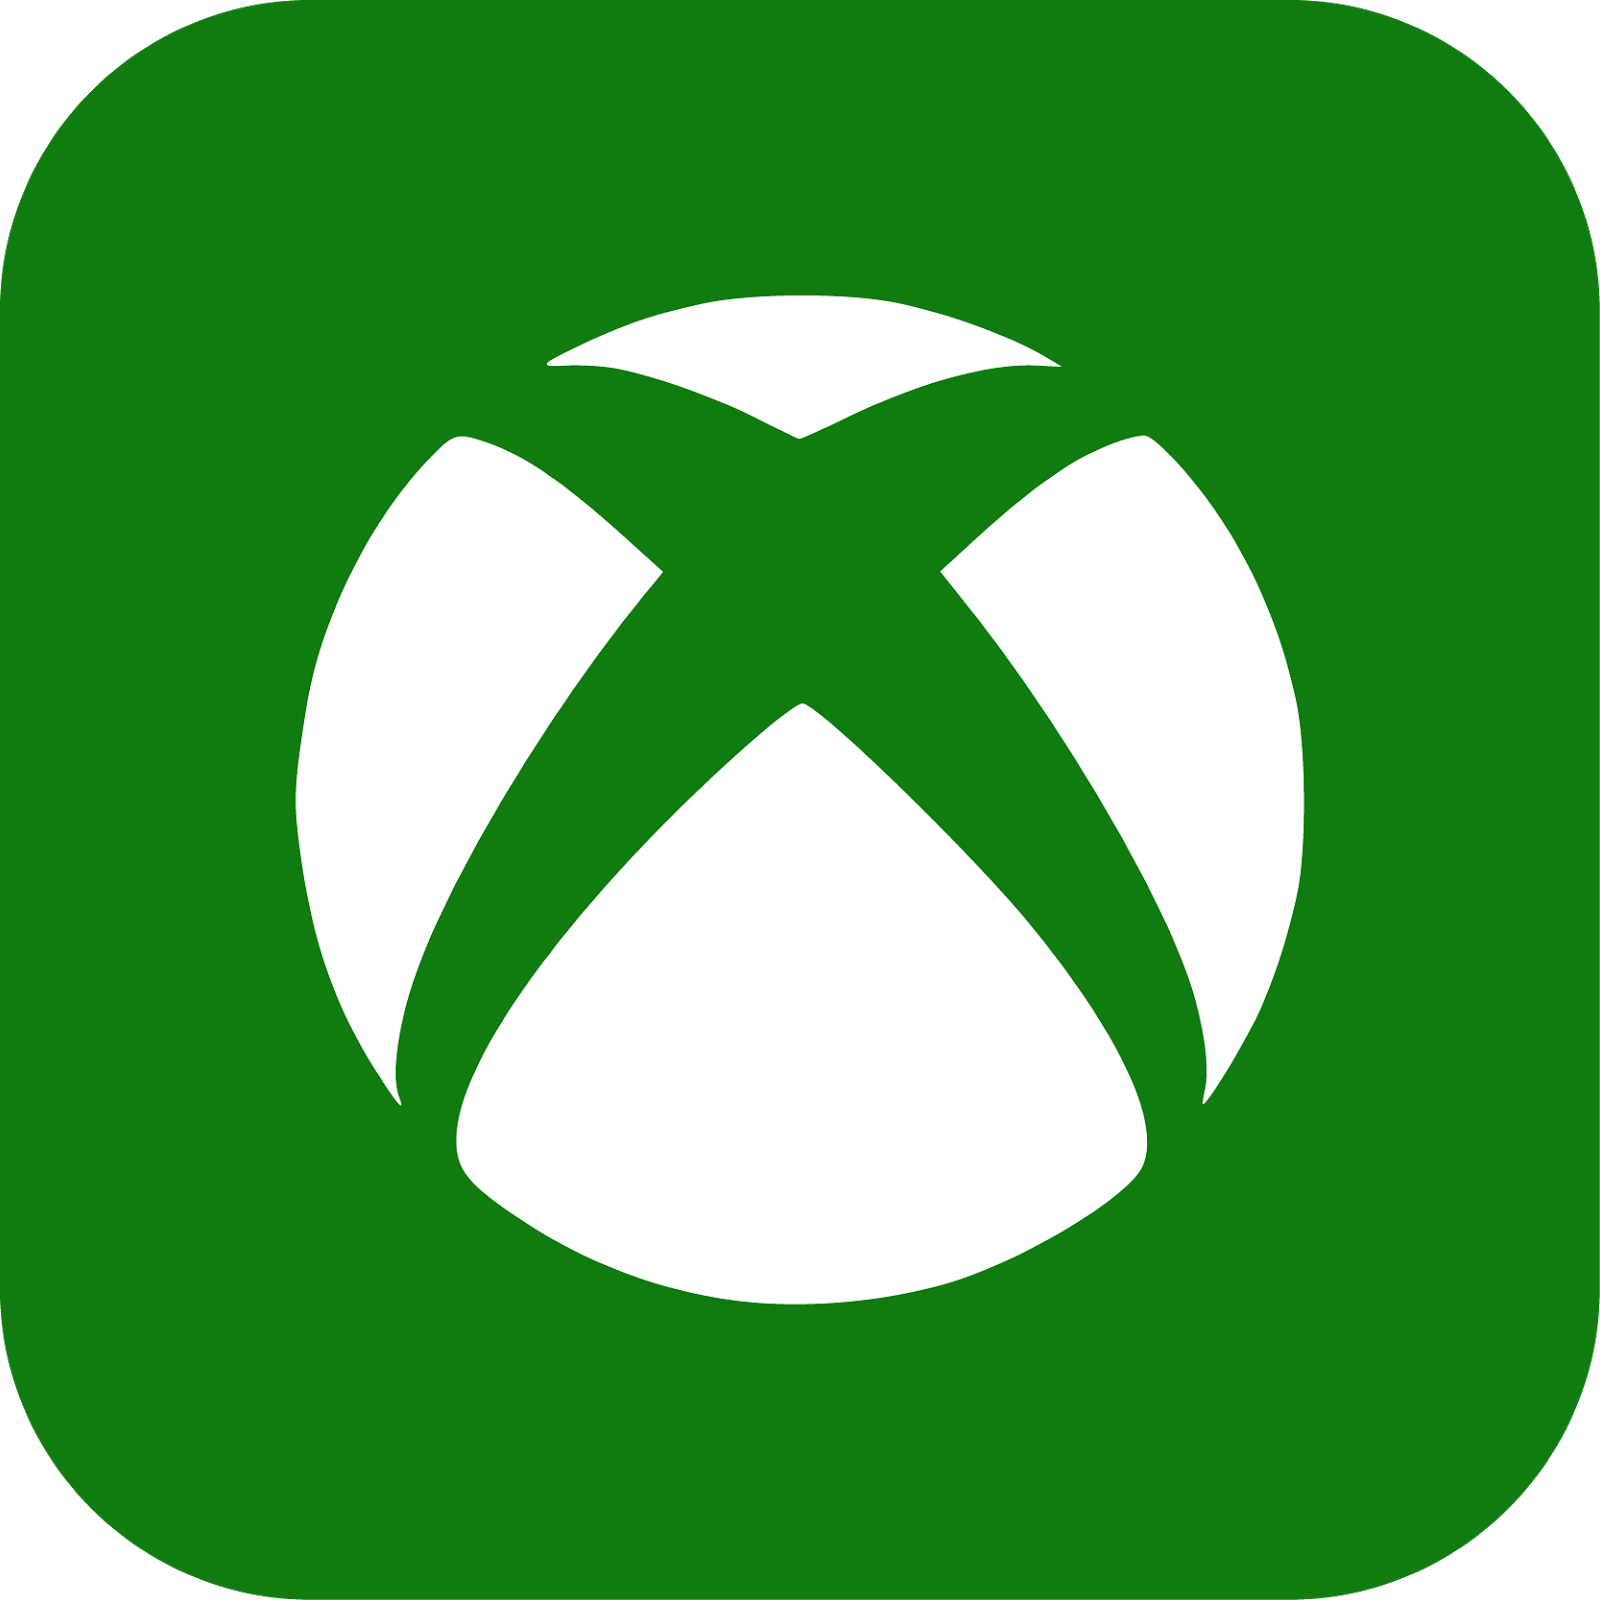 Xbox Logo PNG - 179194